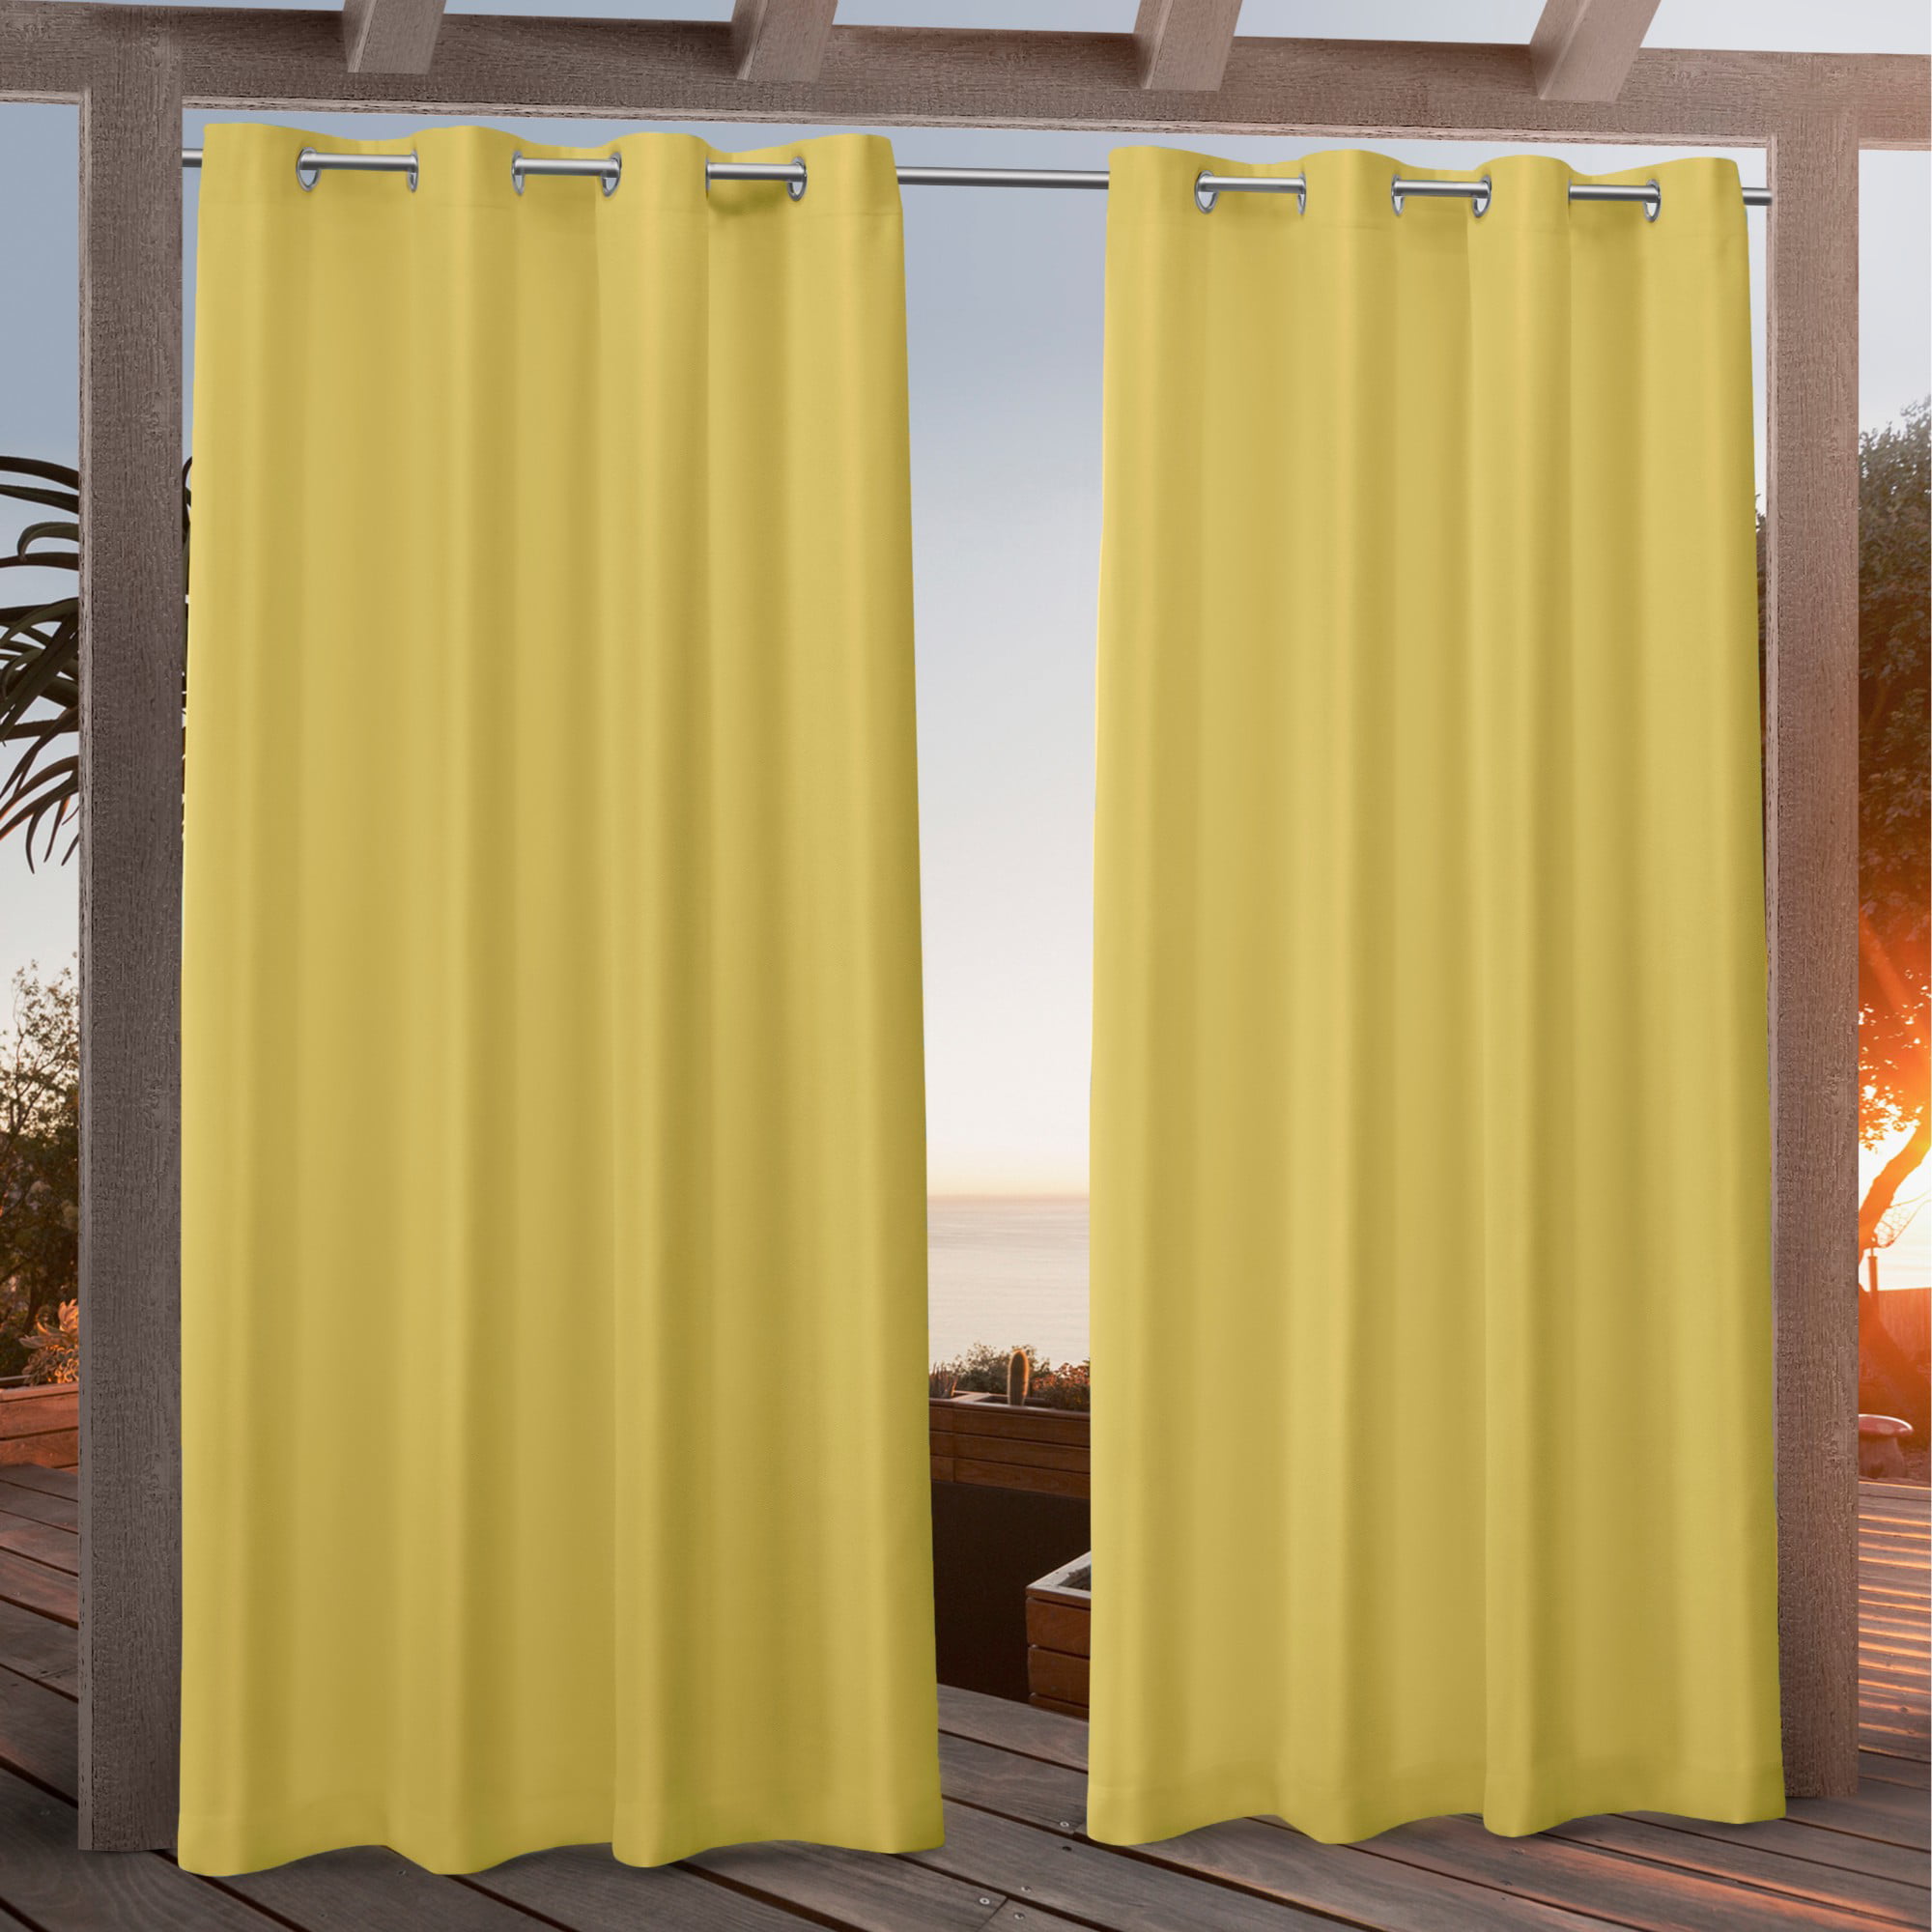 Orange Marmalade Exclusive Home Curtains Canvas Indoor/Outdoor Grommet Top Curtain Panel Pair 54x96 